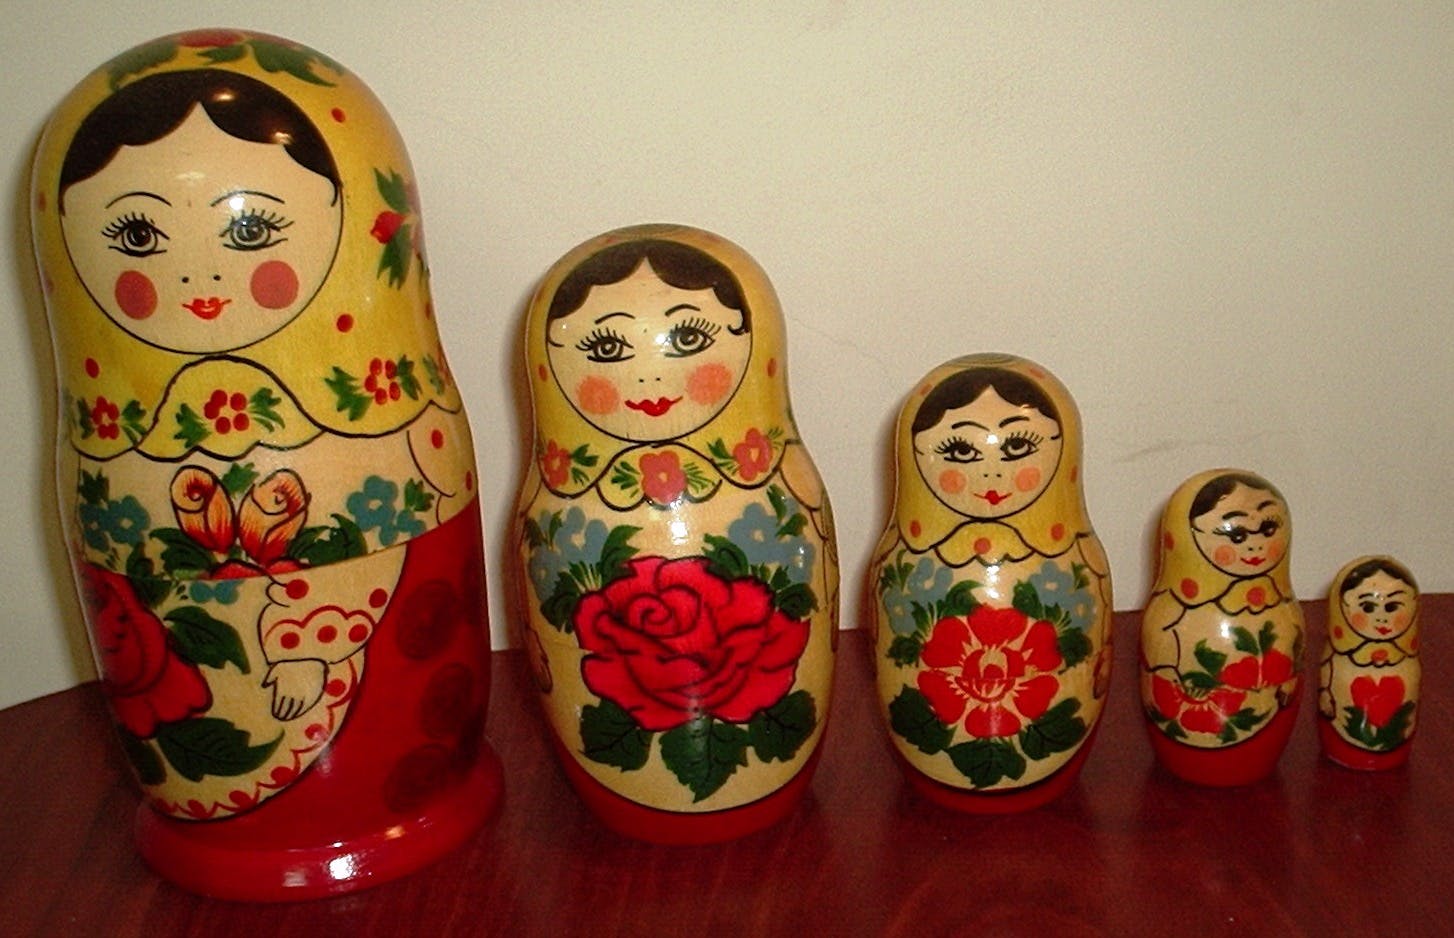 russian nesting dolls | Credit: B Balaji via Flickr